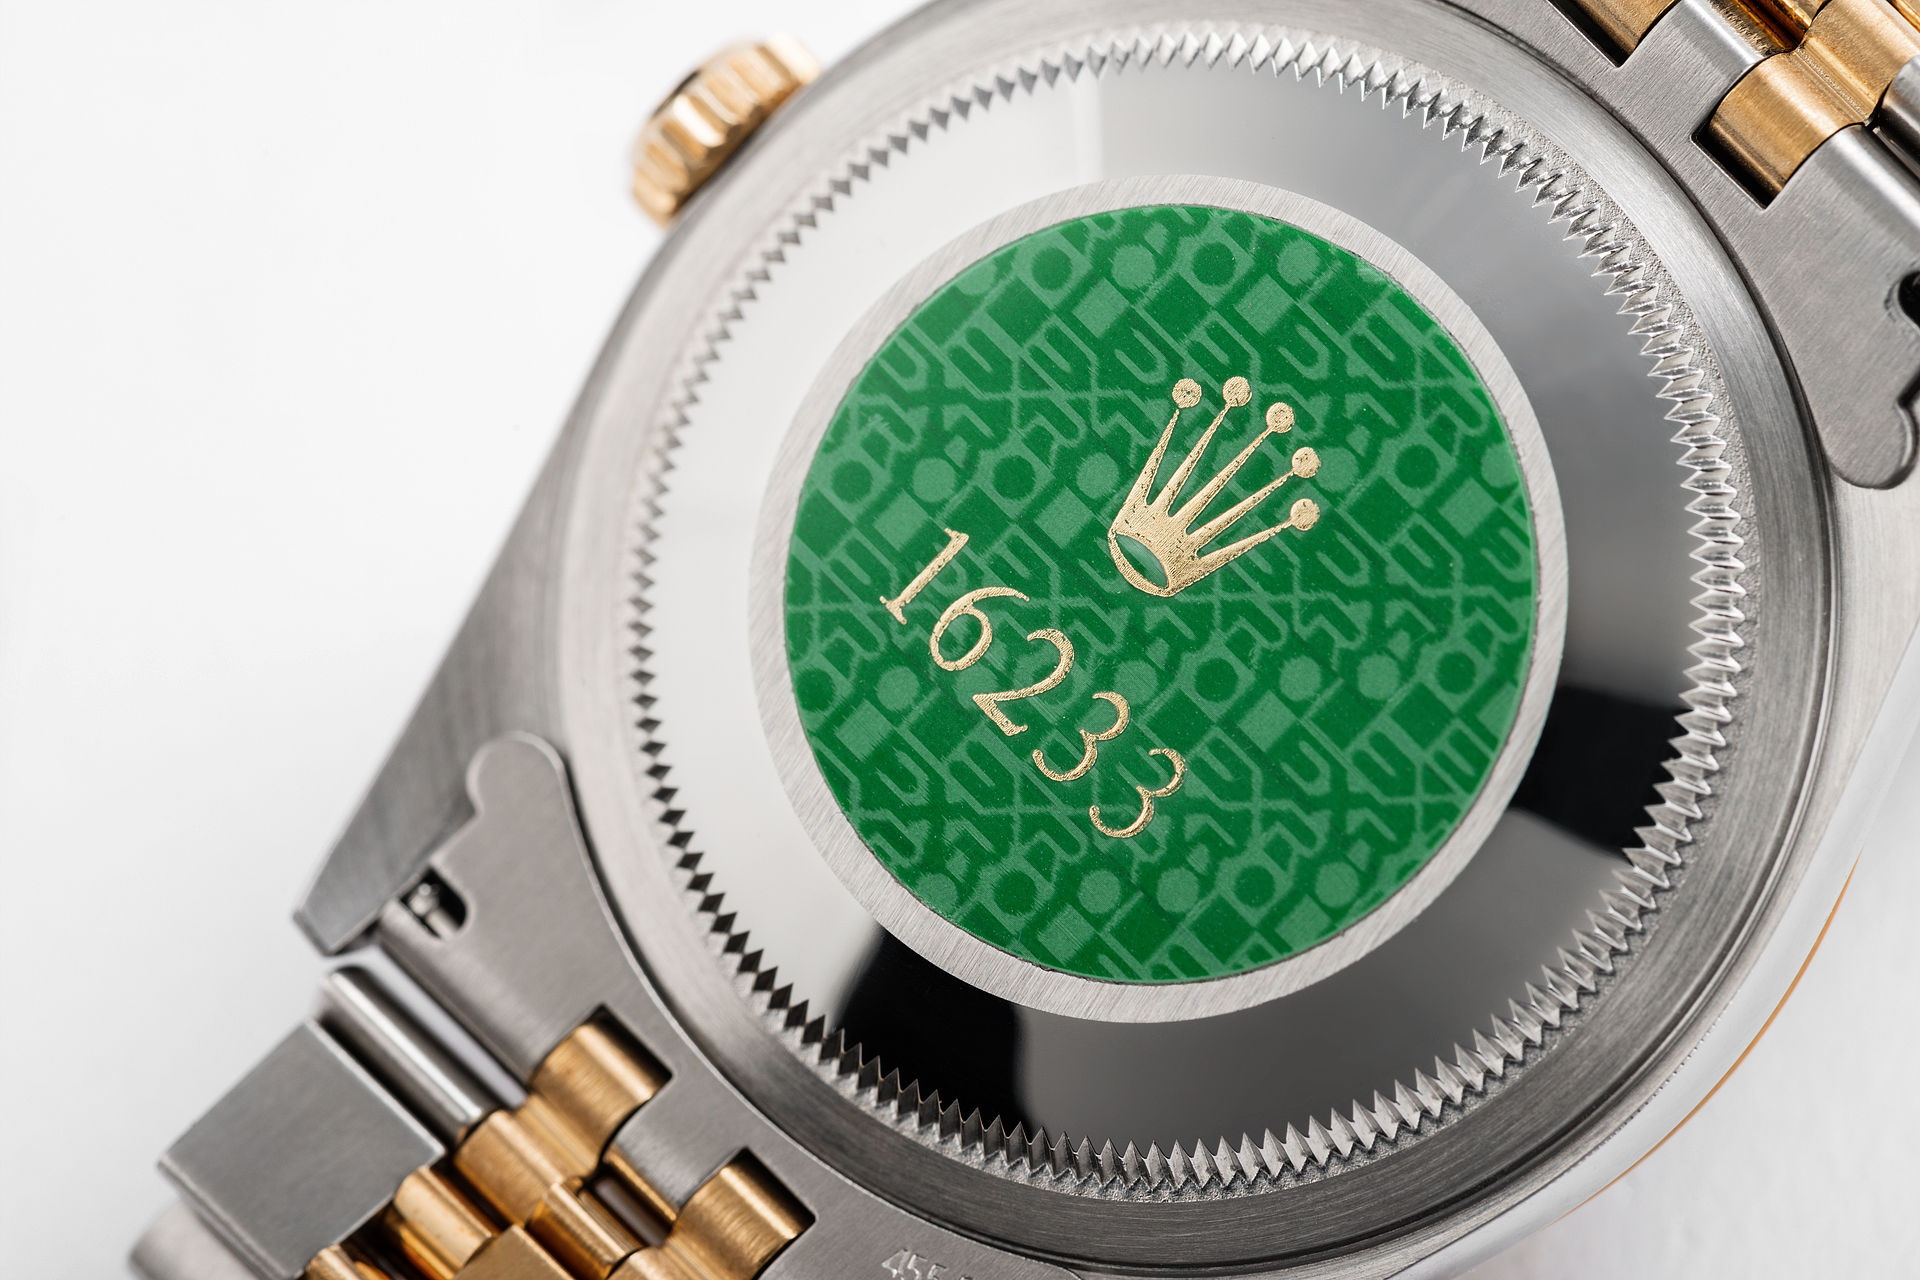 liter apologi Halloween Rolex Datejust Watches | ref 16233 | Brand New Old Stock | The Watch Club